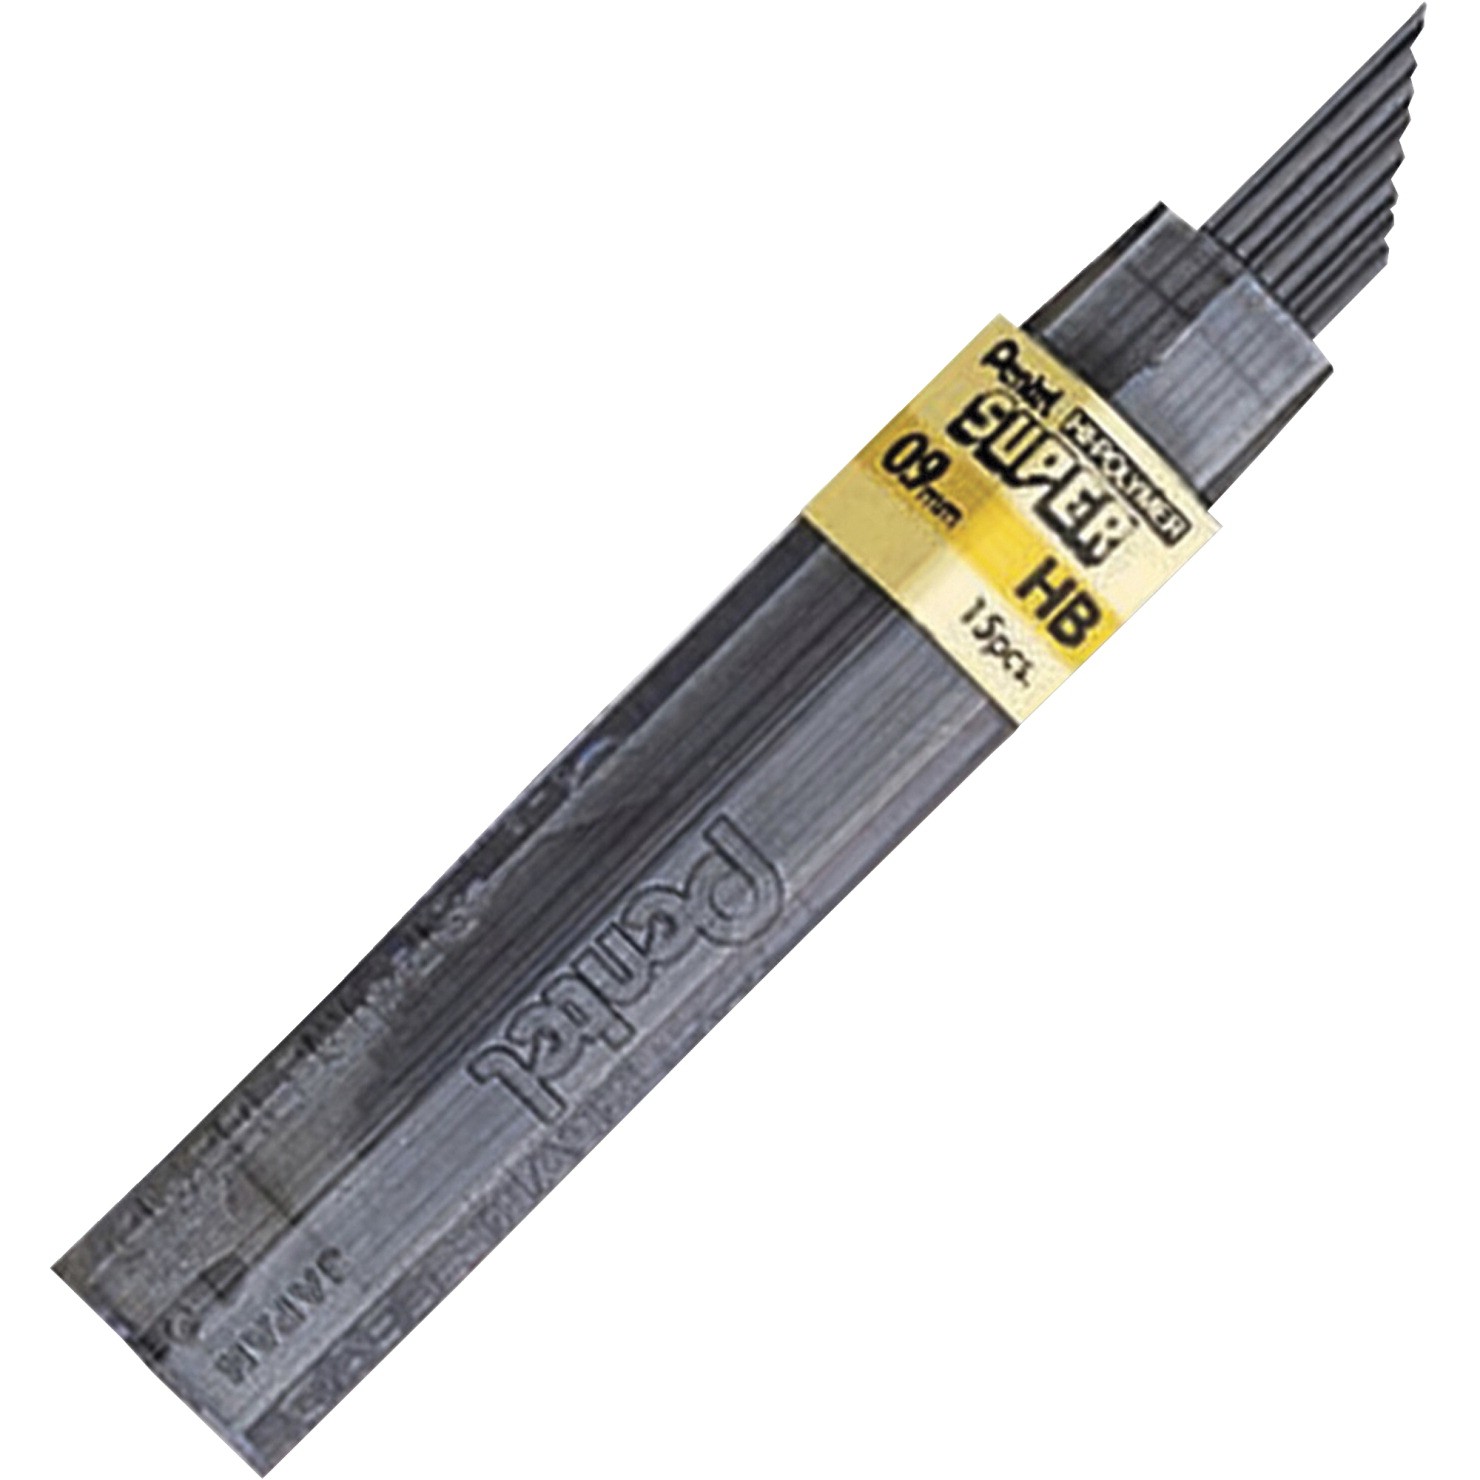 Pentel Super Hi-Polymer Extra Strong Mechanical Pencil Lead Refill, 0.9 mm, Black - 15/Pkg - PEN509HB